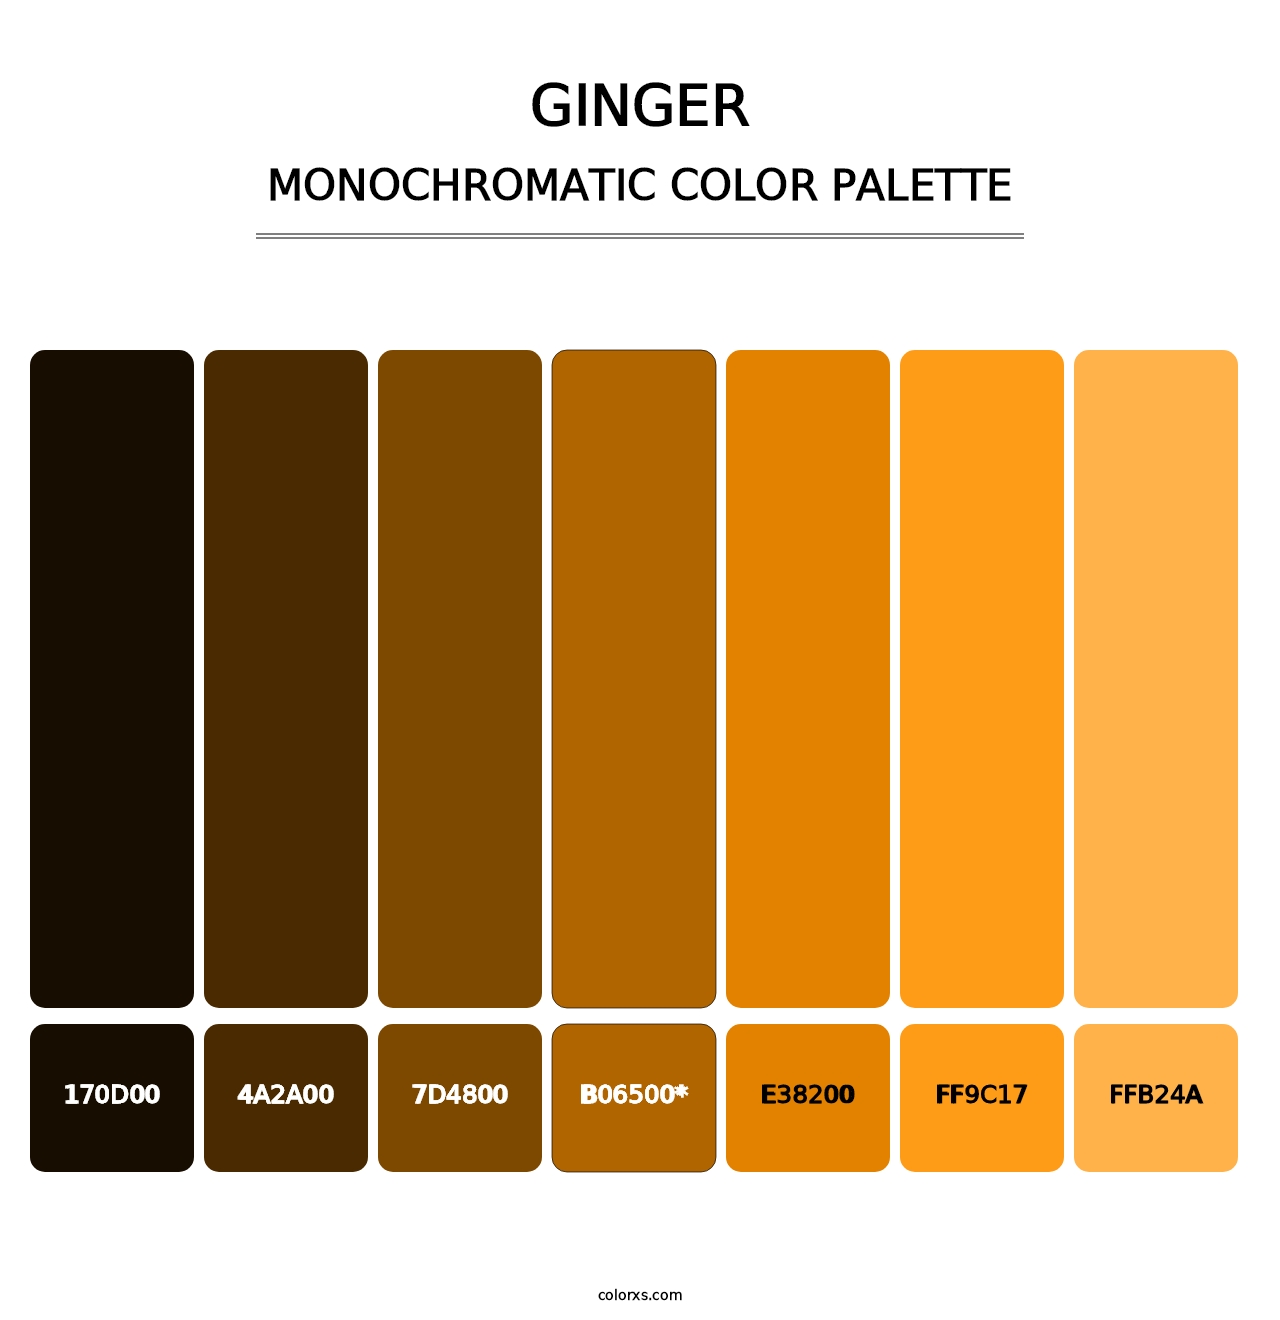 Ginger - Monochromatic Color Palette